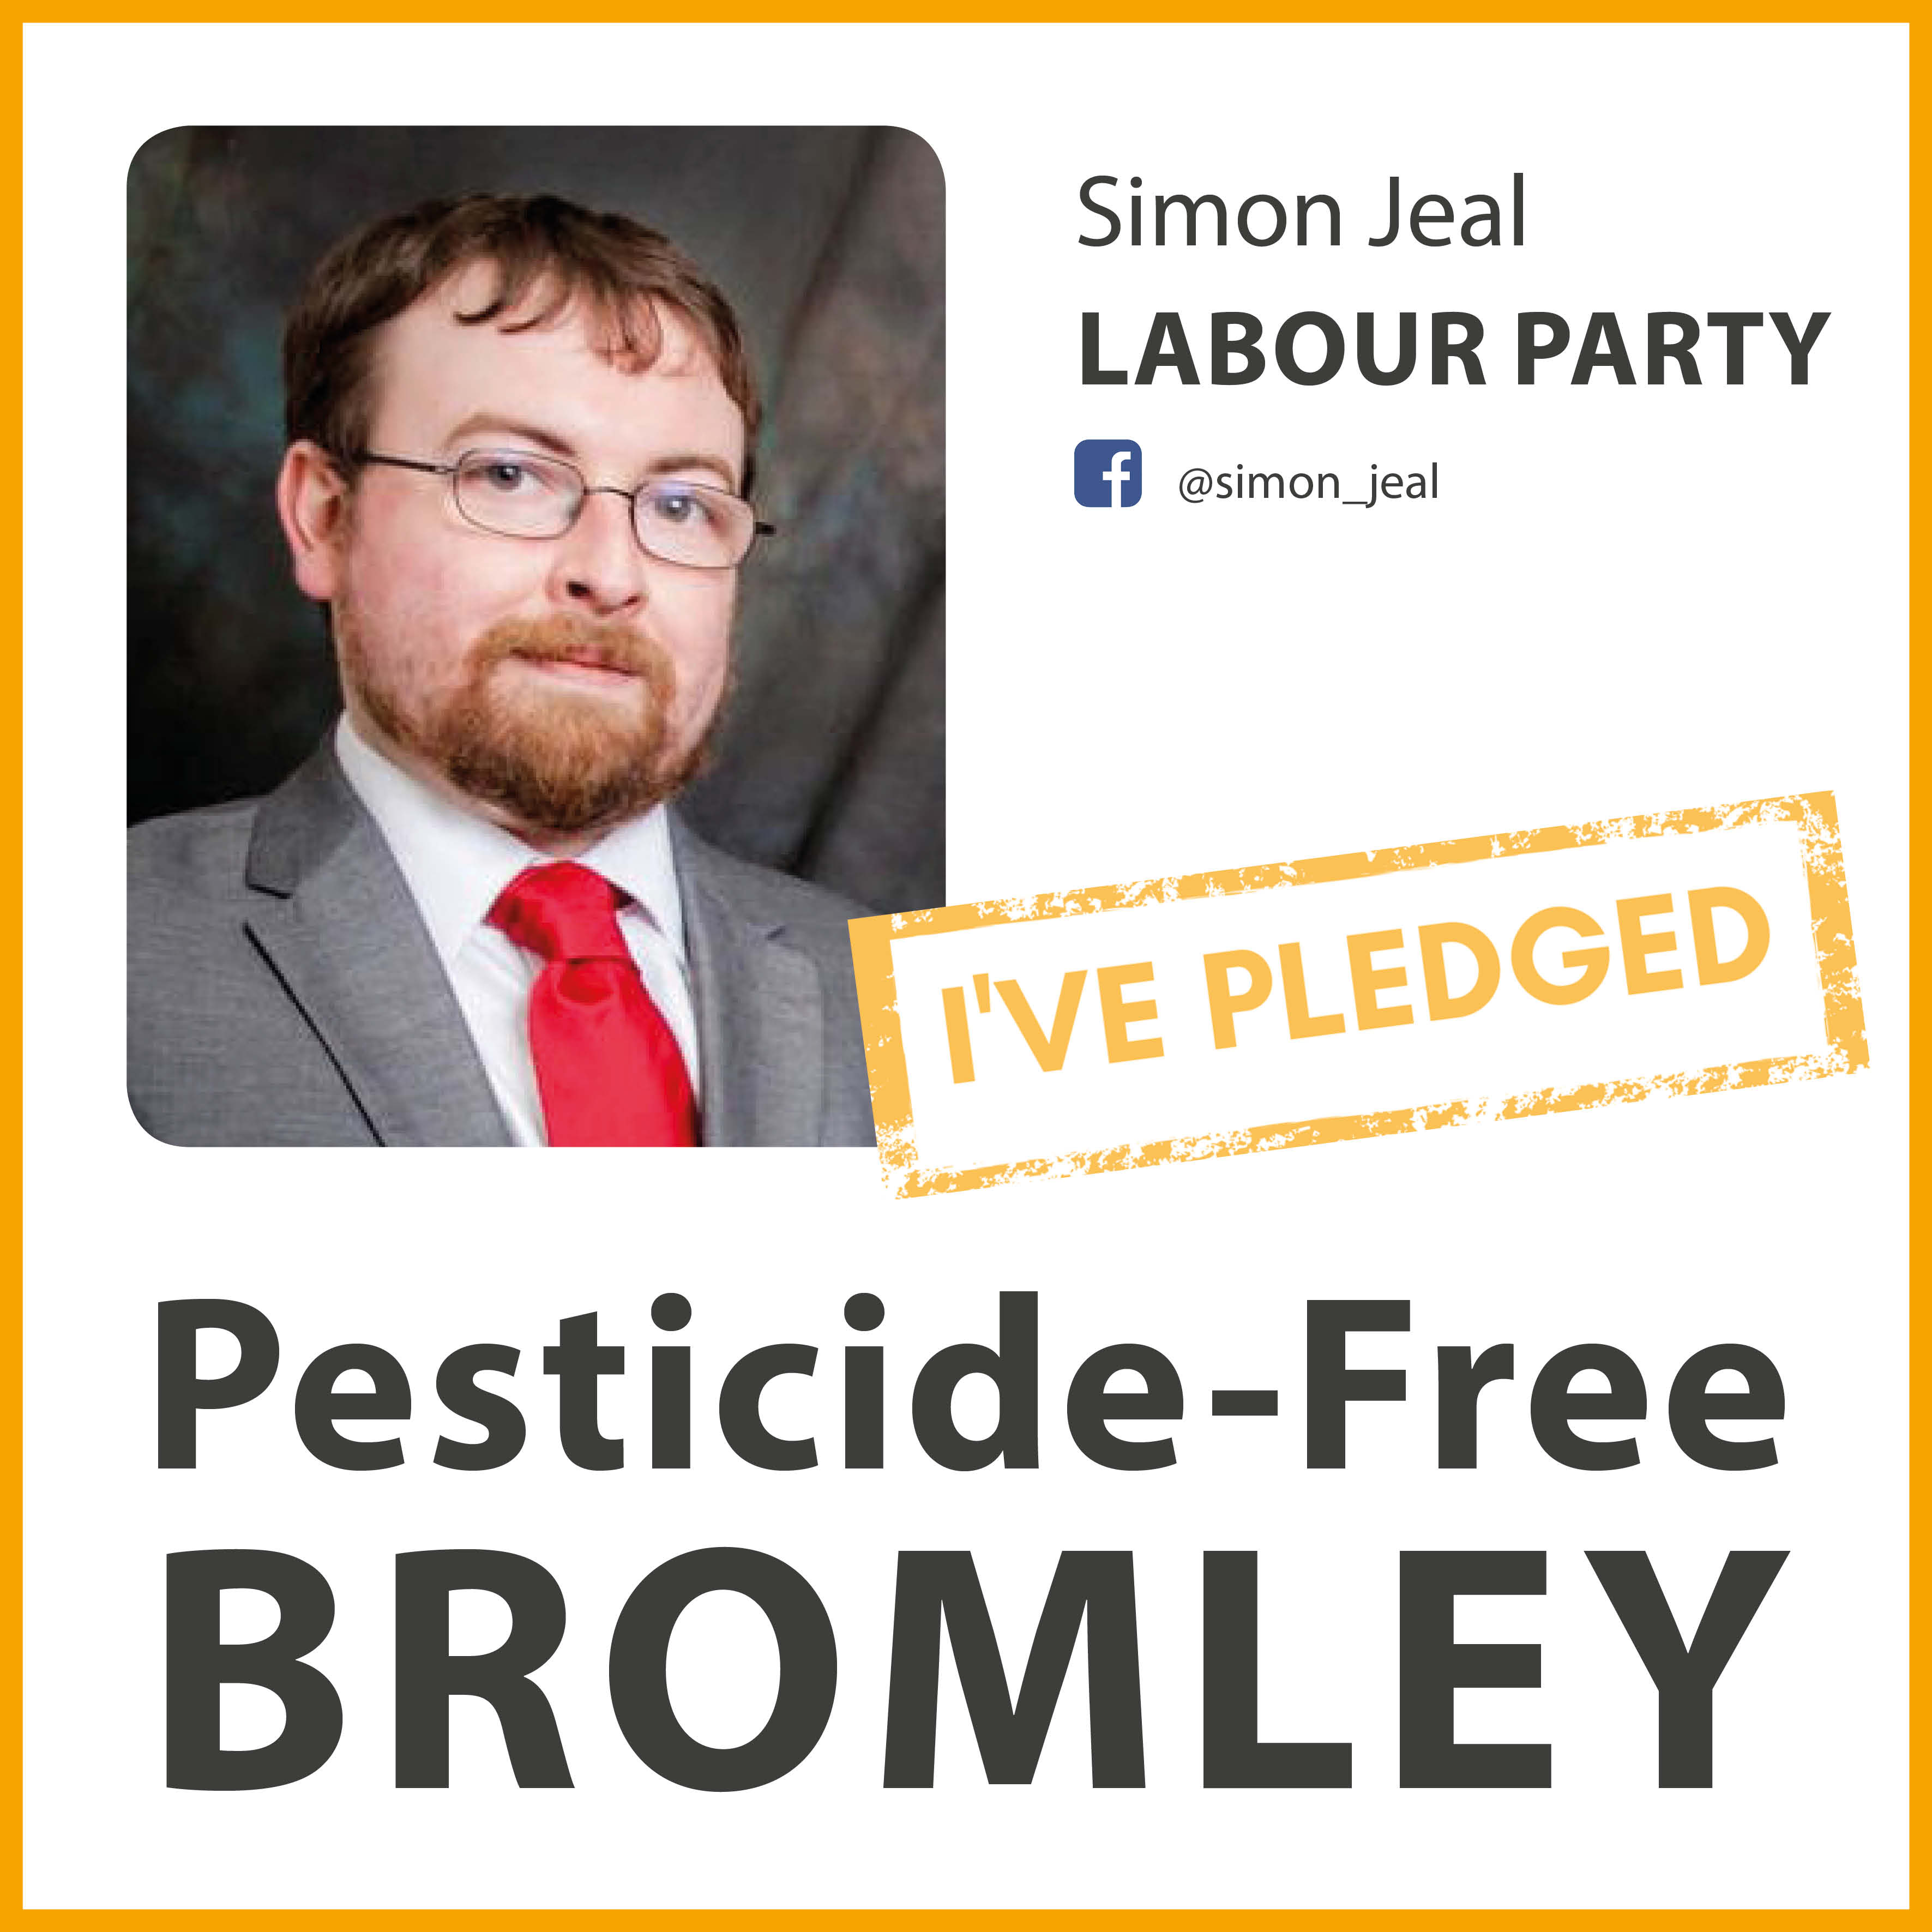 Simon Jeal has pledged to make Bromley pesticide-free